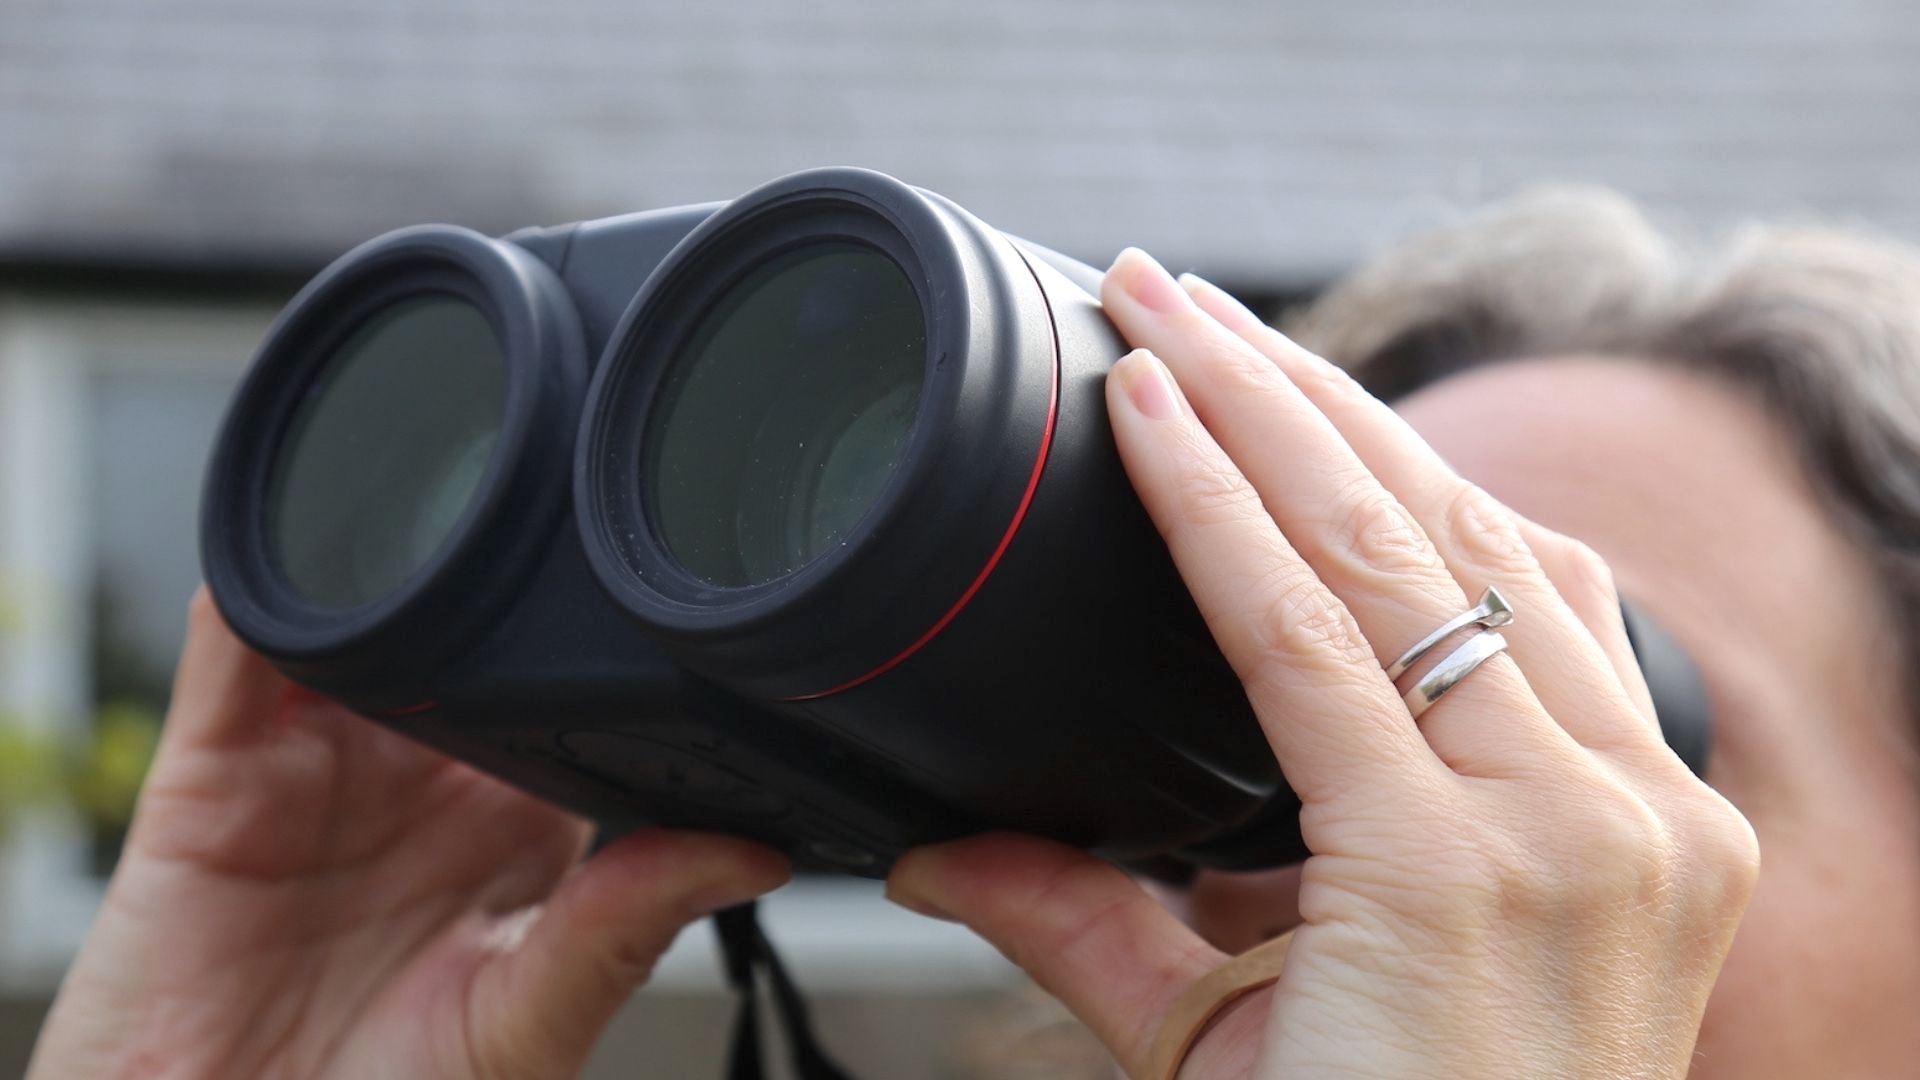 Canon 10x42L IS WP image stabilized binoculars review: image shows Canon 10x42L IS WP image stabilized binoculars